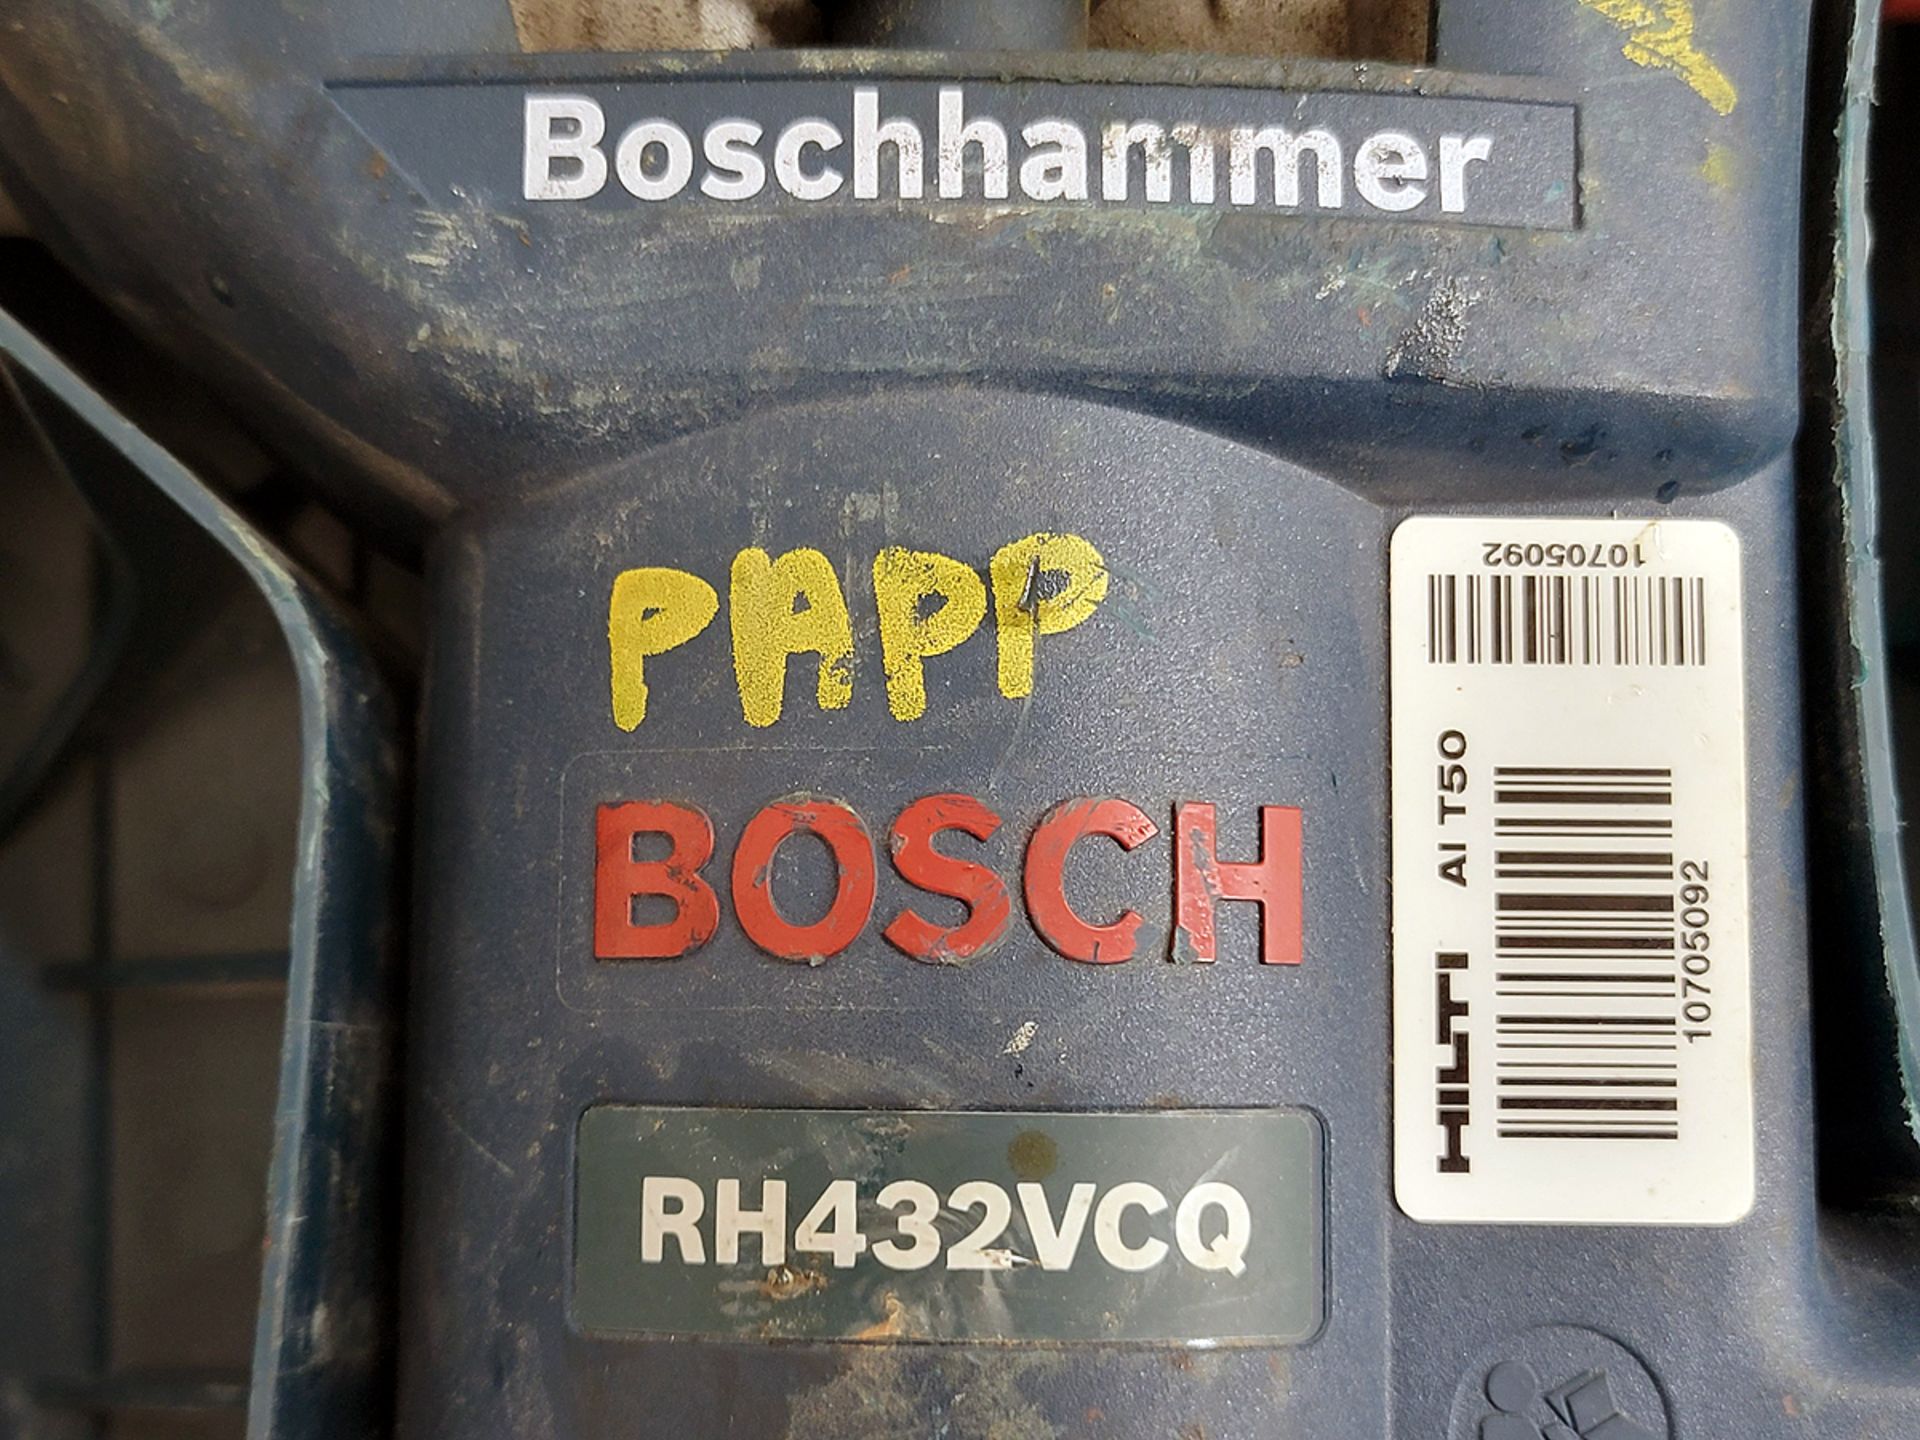 [Each] Bosch Boschhammer RH432VCQ Rotary Hammer Drill w/ case - Image 2 of 3